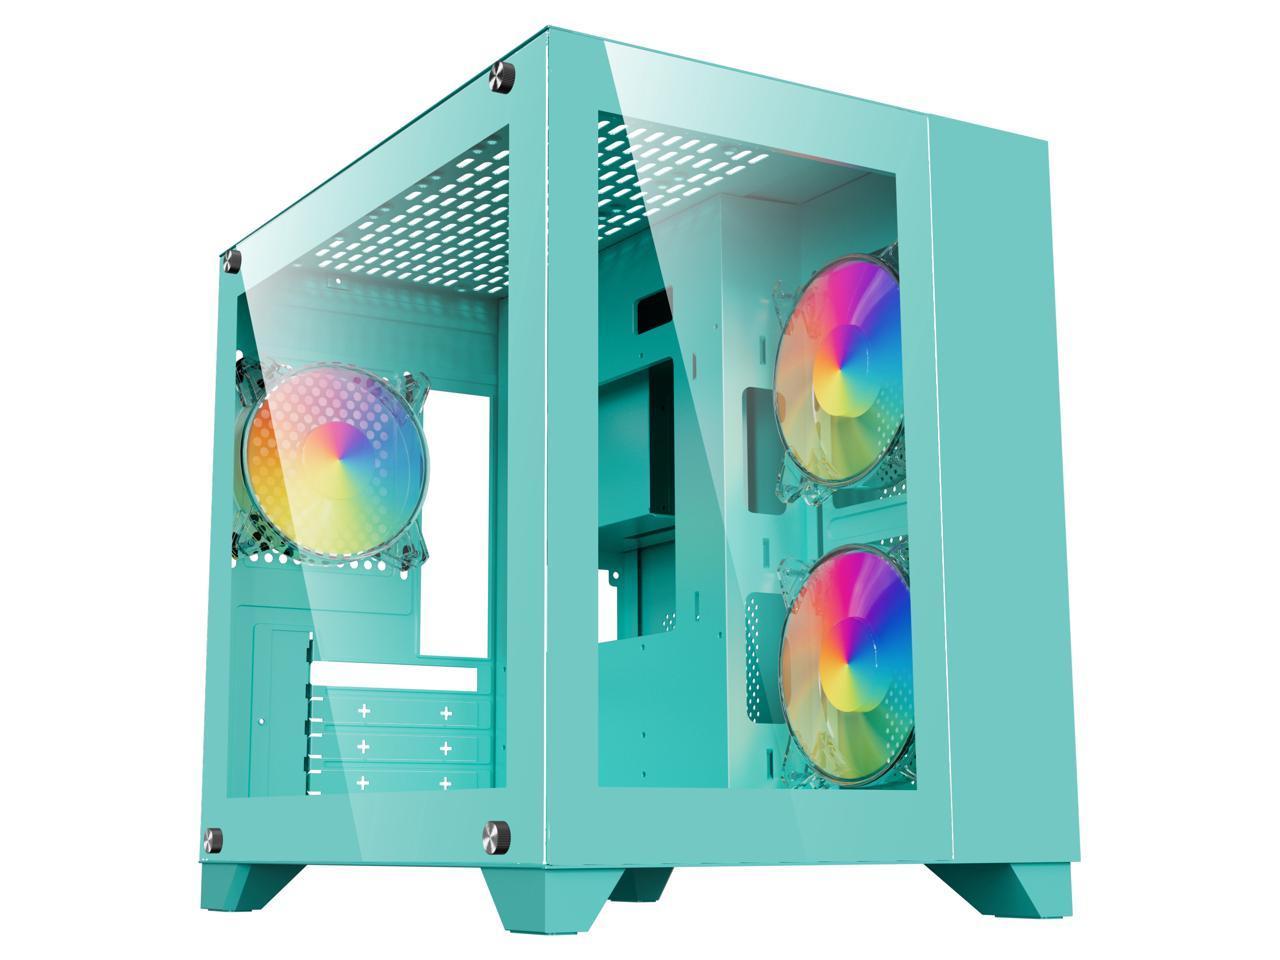 DIYPC ARGB-Q3-Green Gaming Computer Case mATX  micro ATX or Pink $53.99 with free shipping @ Newegg